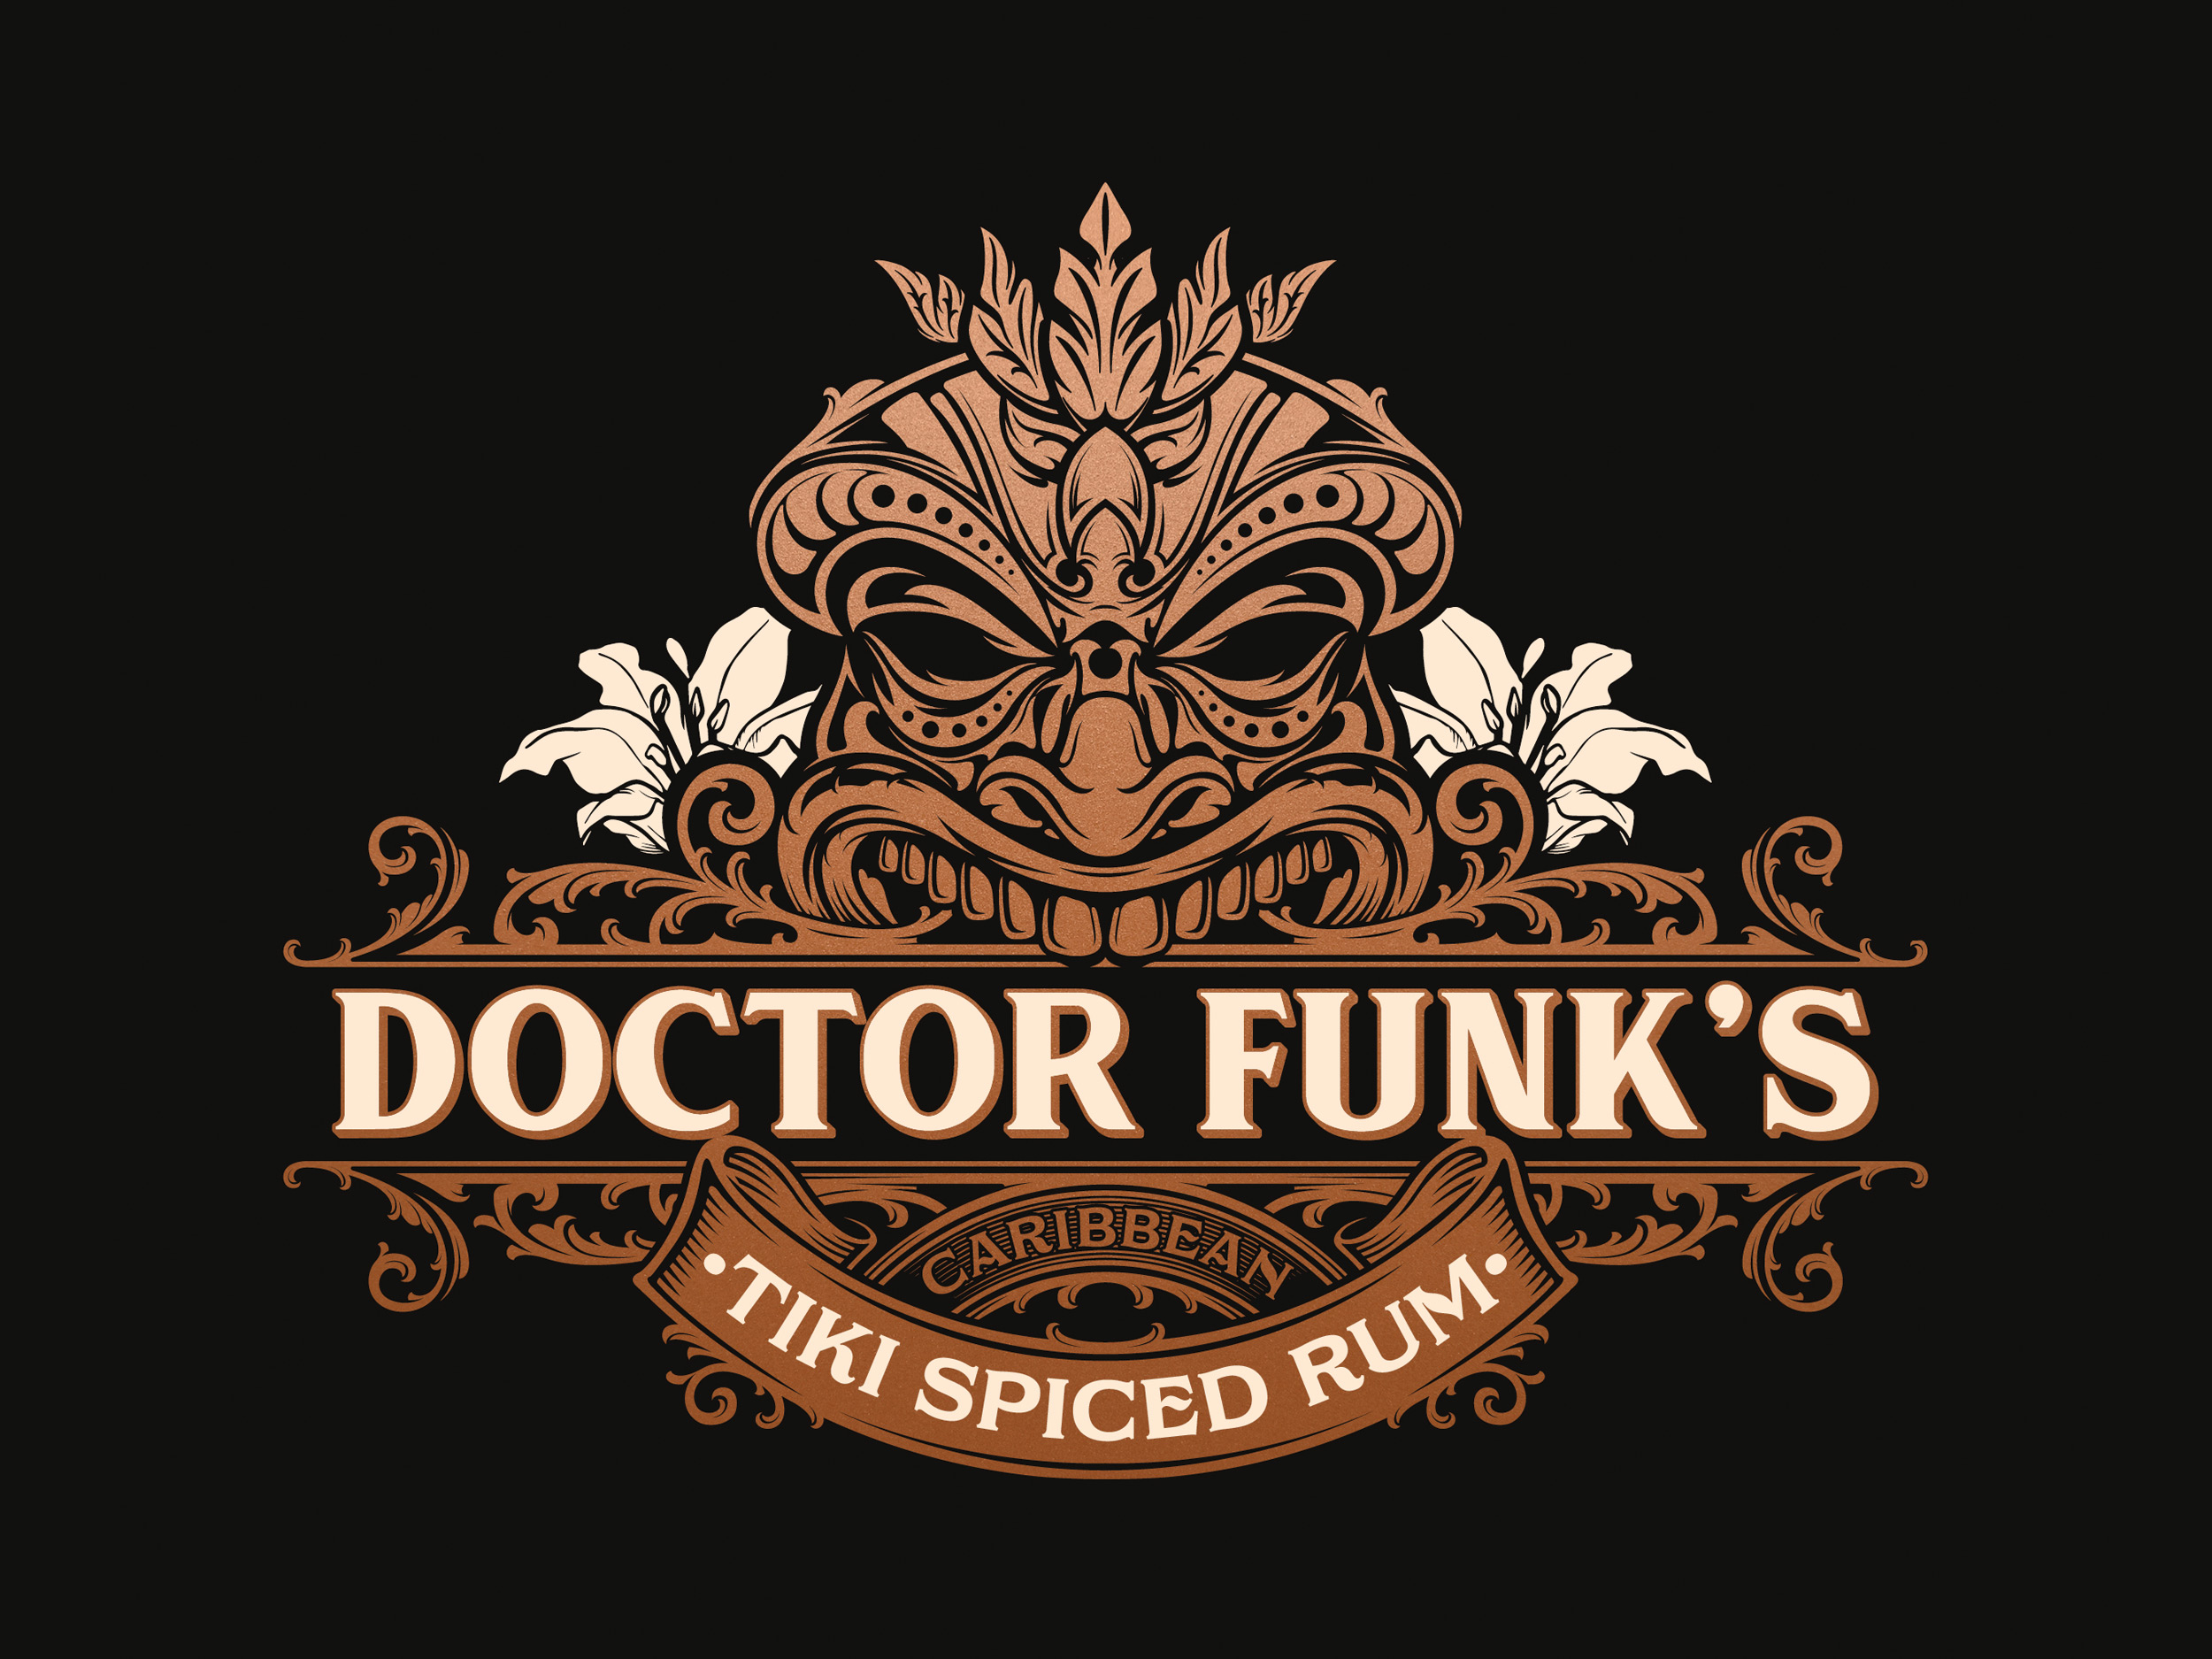 Doctor Funk's craft rum brand